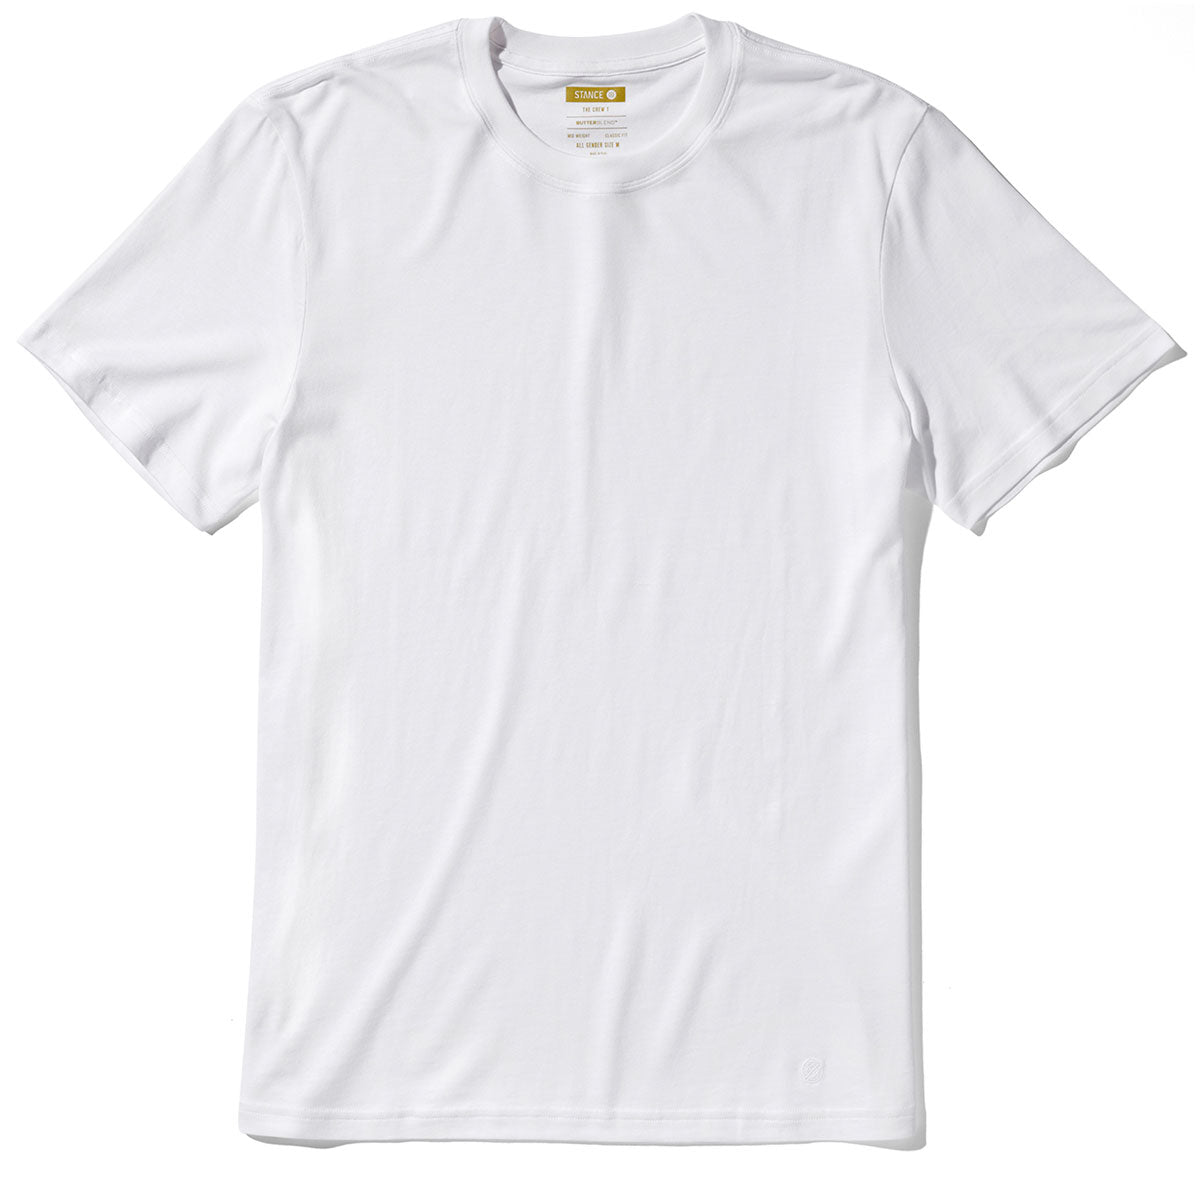 Stance Butter Blend T-Shirt - White image 1